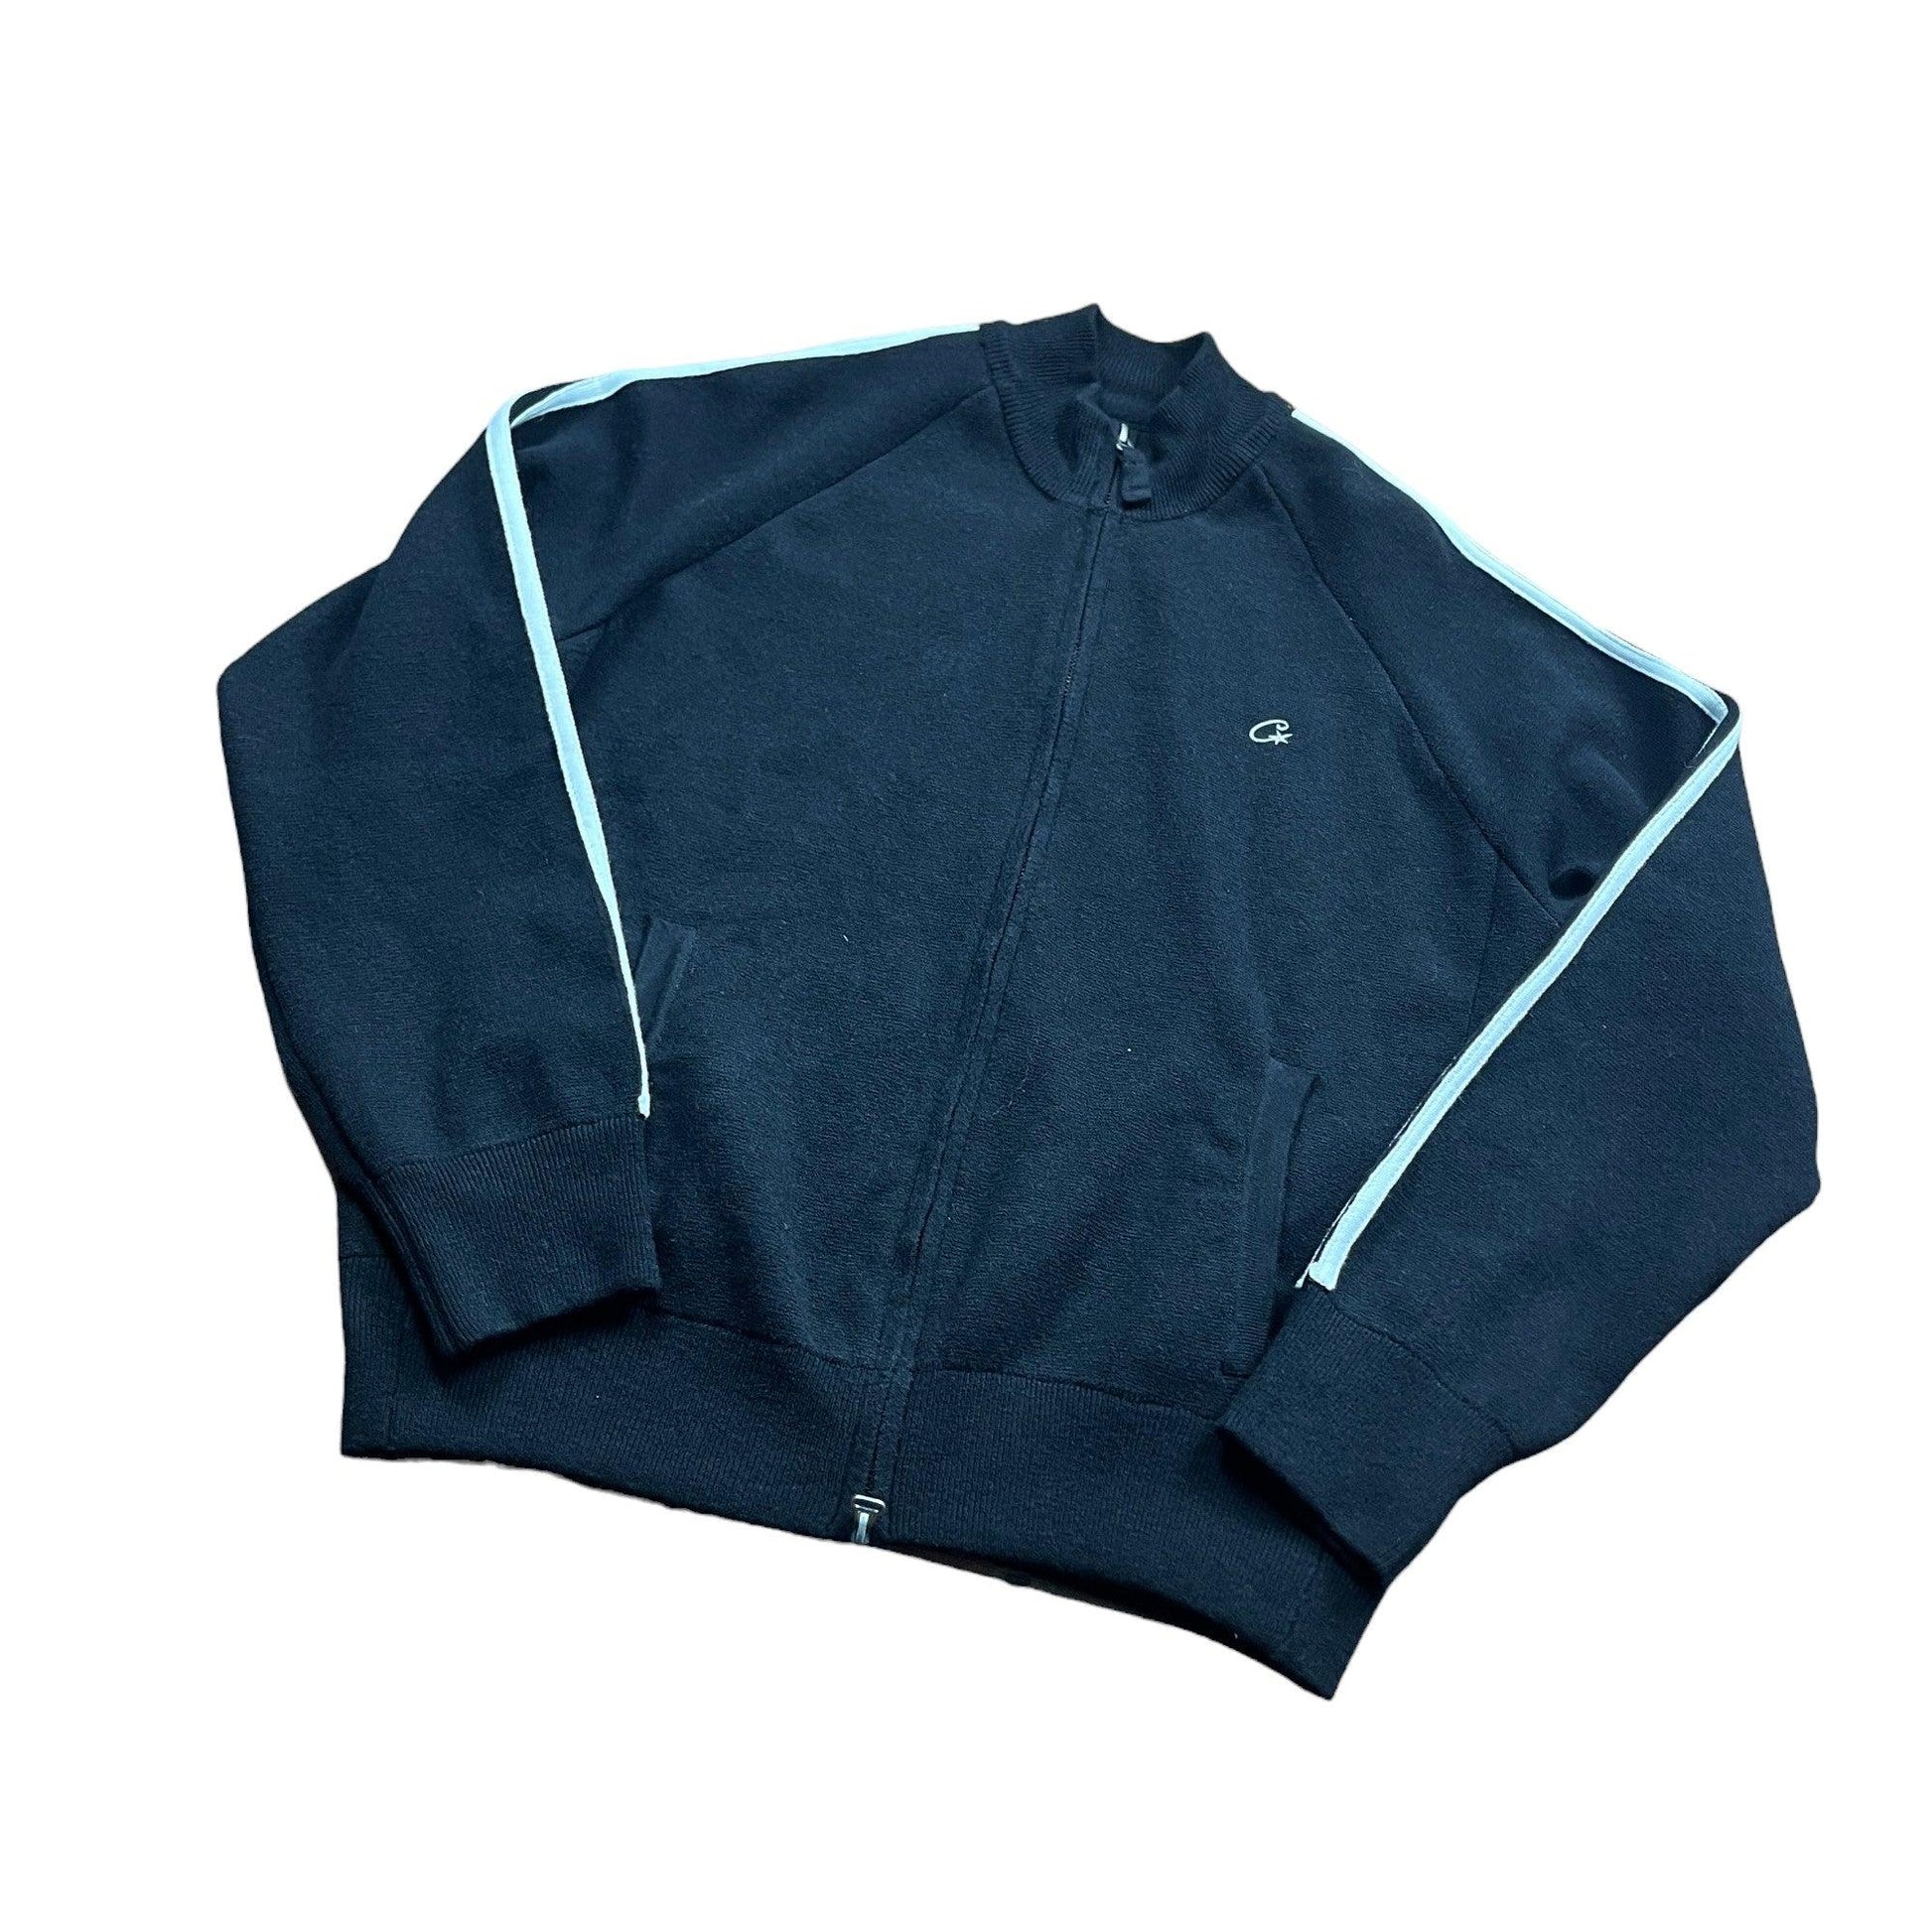 Black Corteiz Full Zip Knitted Jacket - Small - The Streetwear Studio